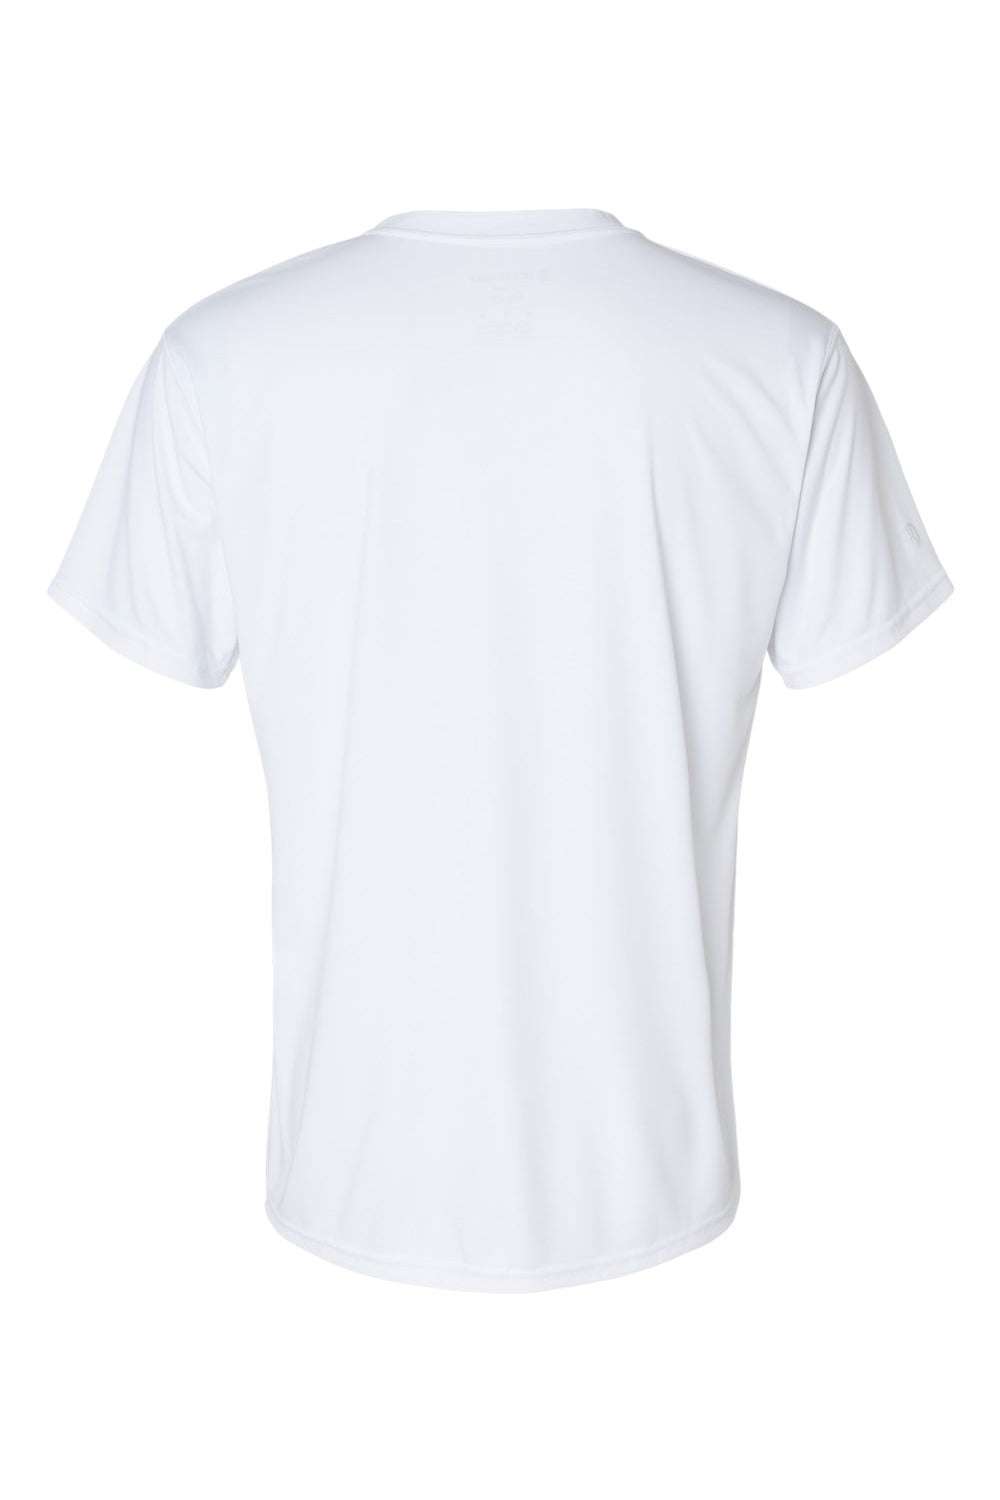 Holloway 222818 Mens Momentum Short Sleeve Crewneck T-Shirt White Flat Back